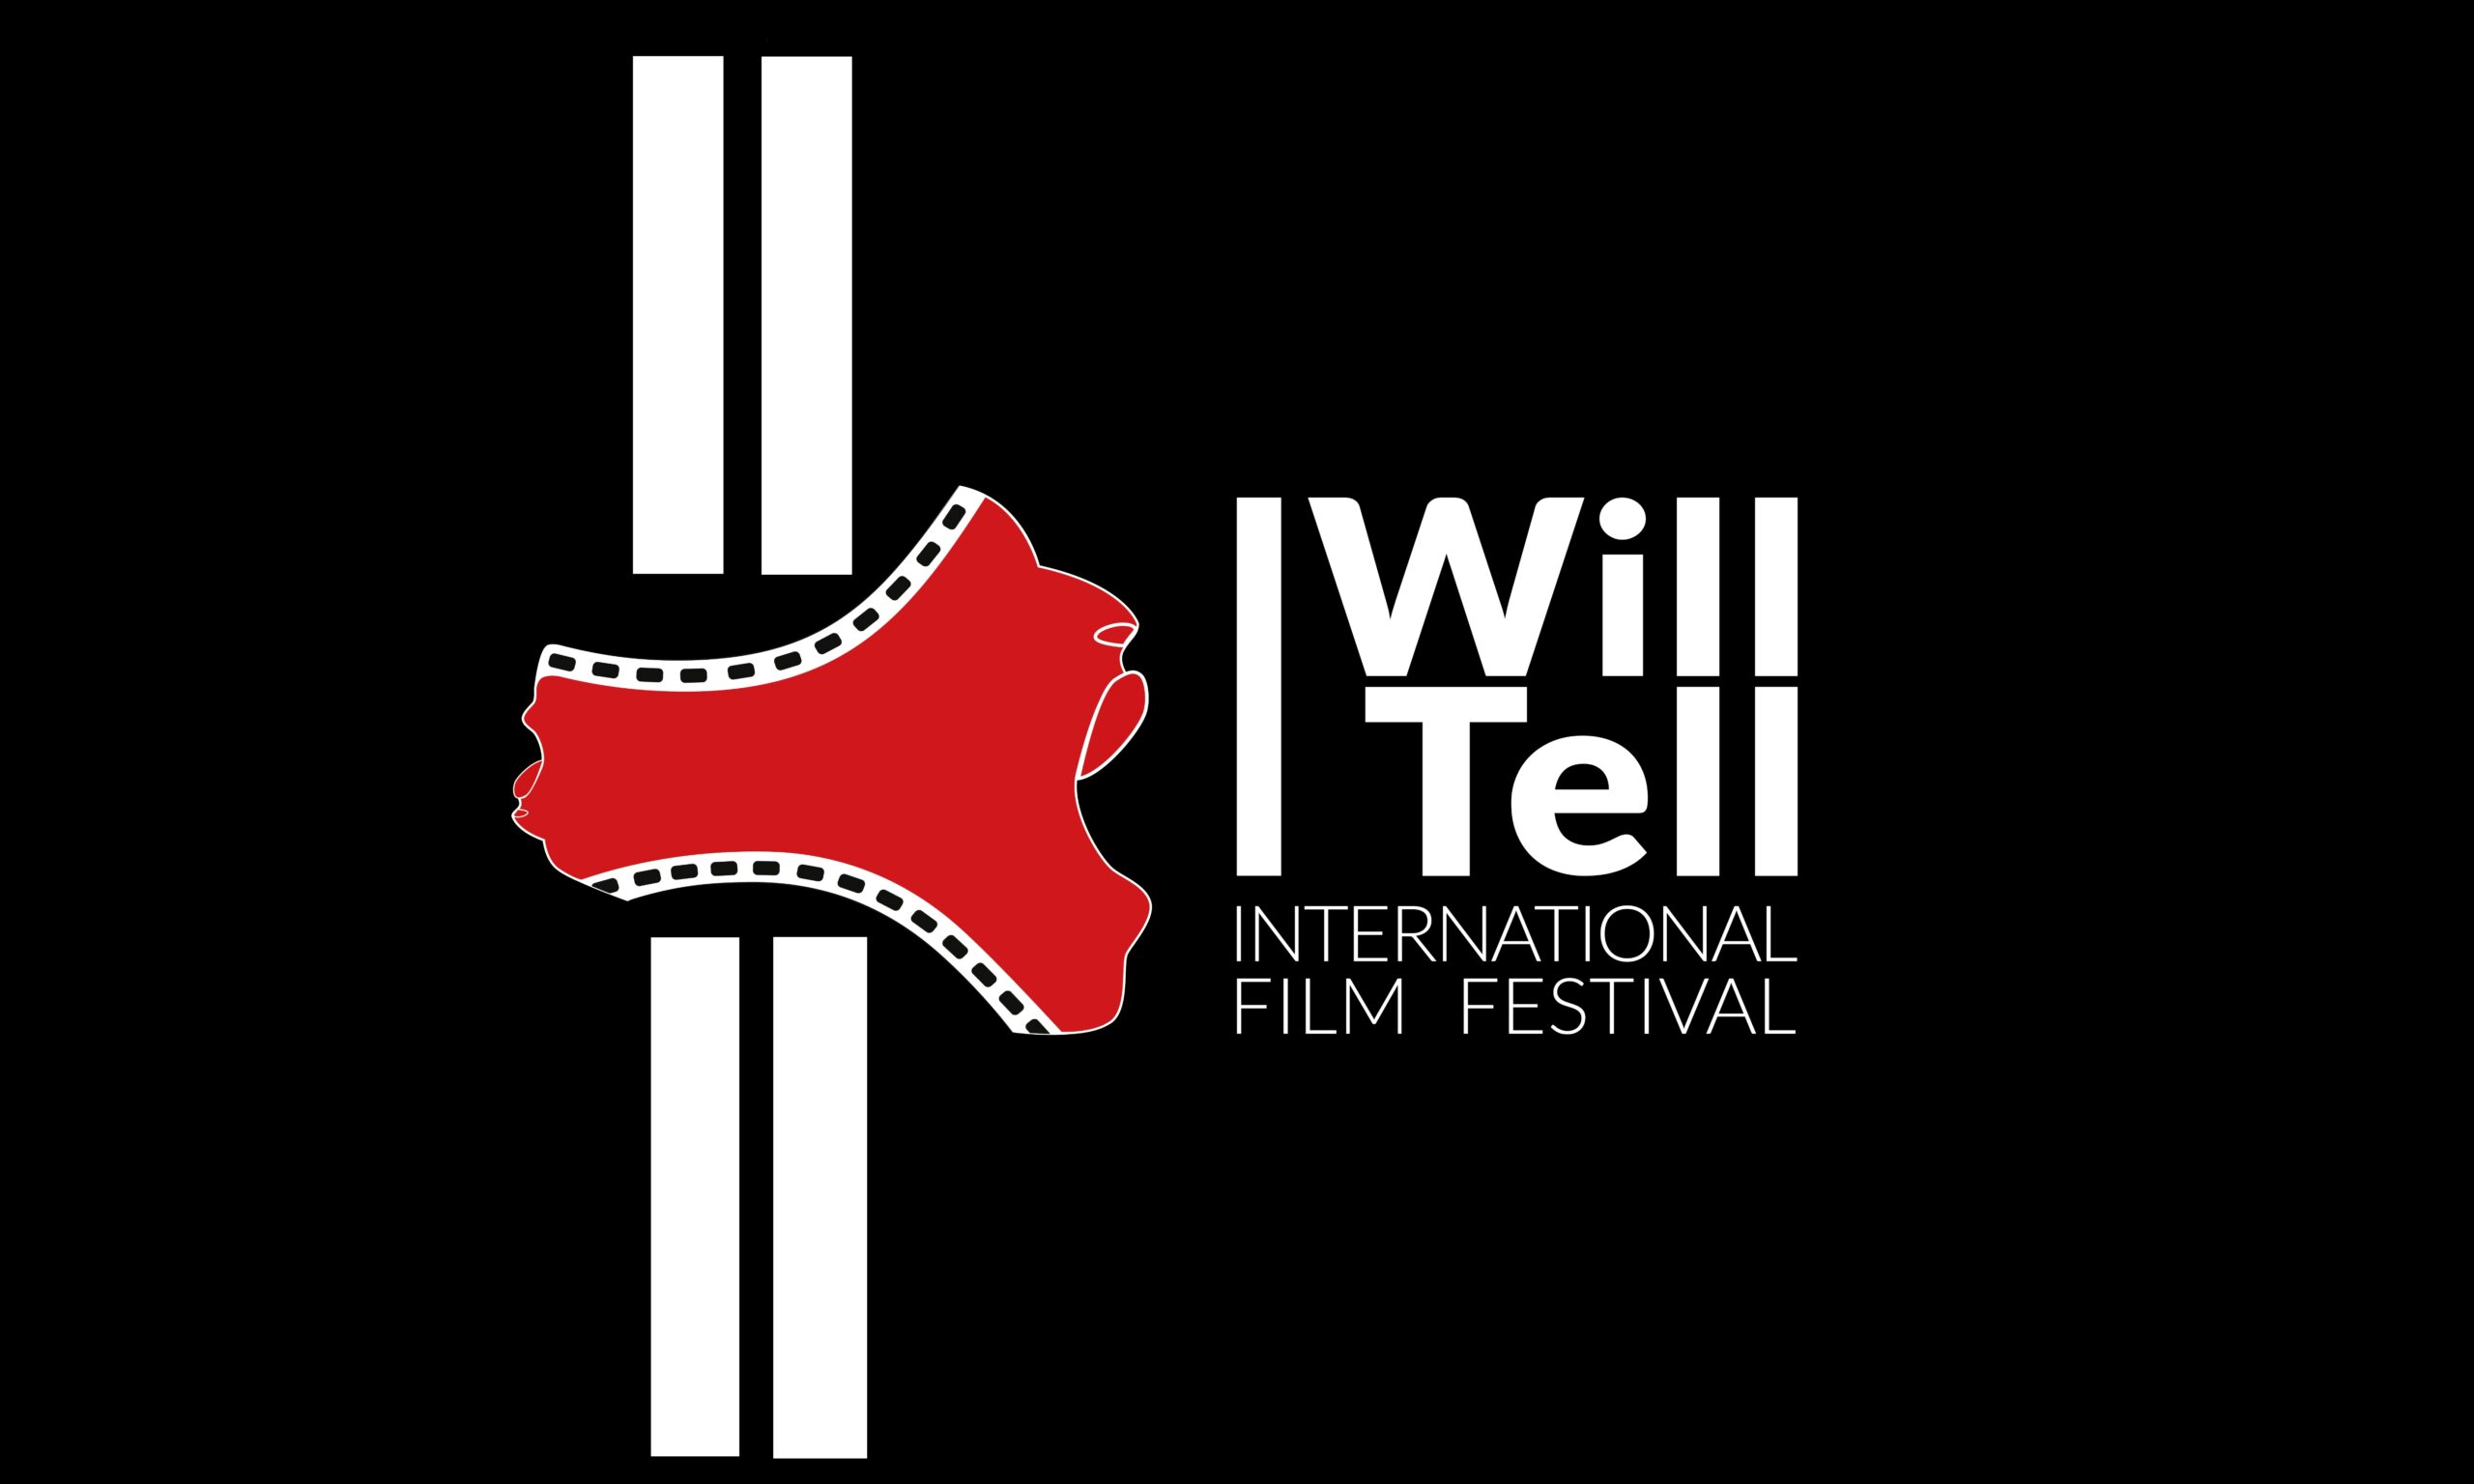 I Will Tell International Film Festival - Celebrate. Challenge. Catalyse Change